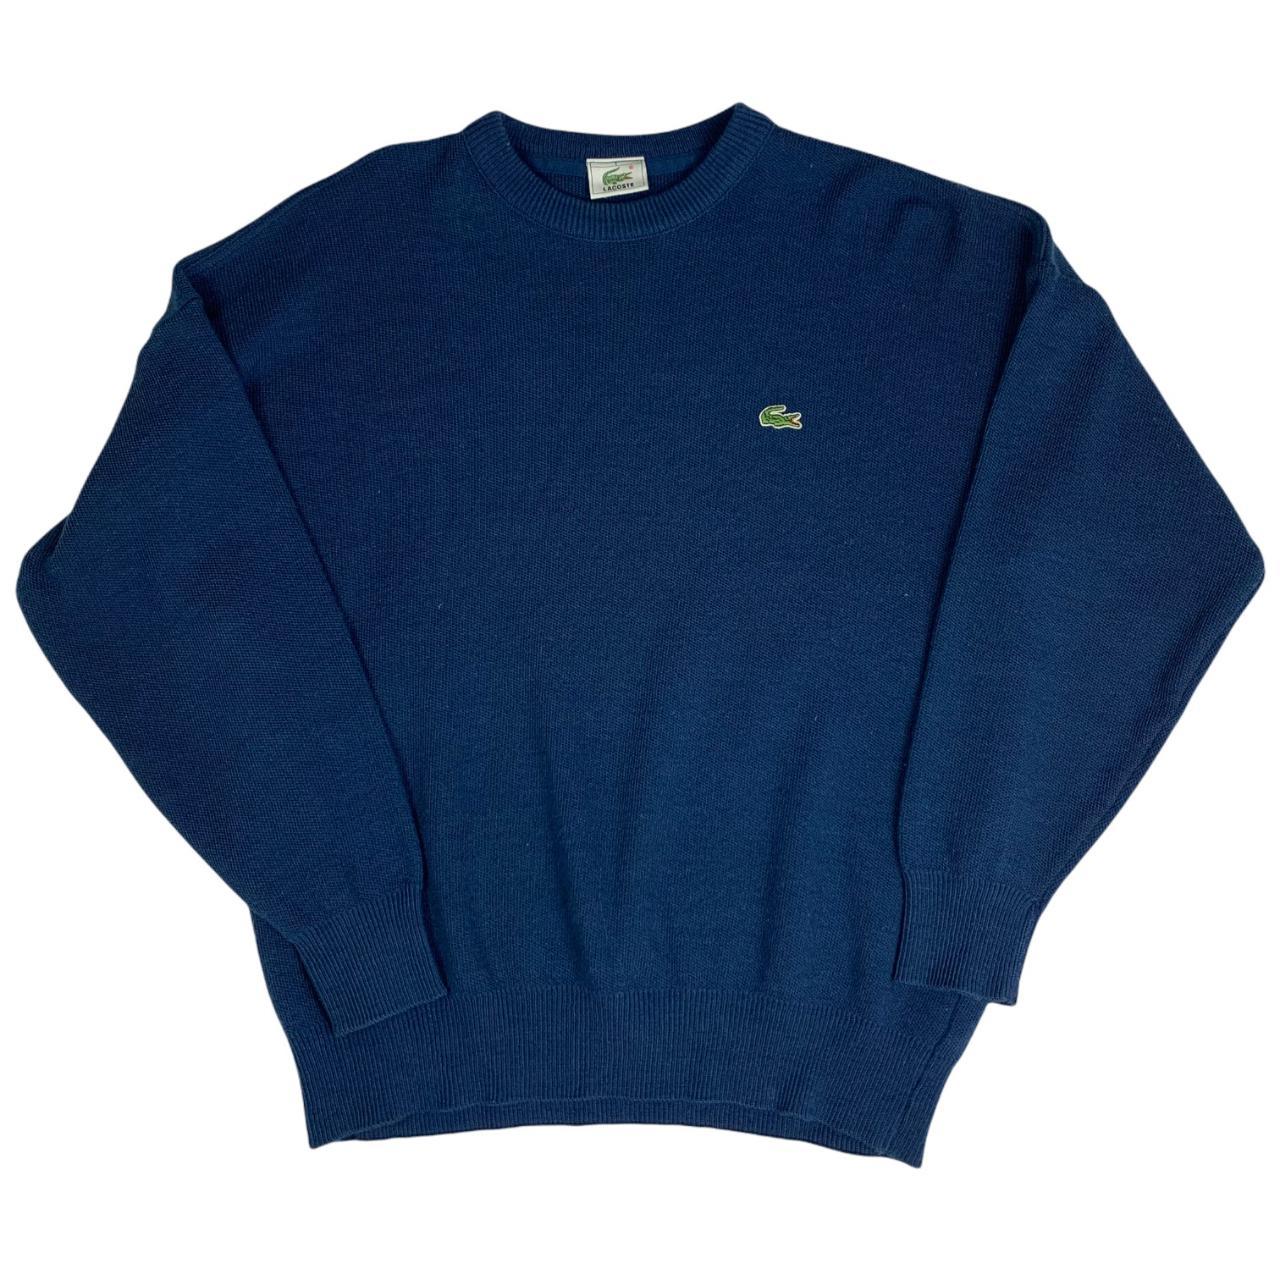 Vintage Lacoste knitted jumper / sweatshirt. Super... - Depop